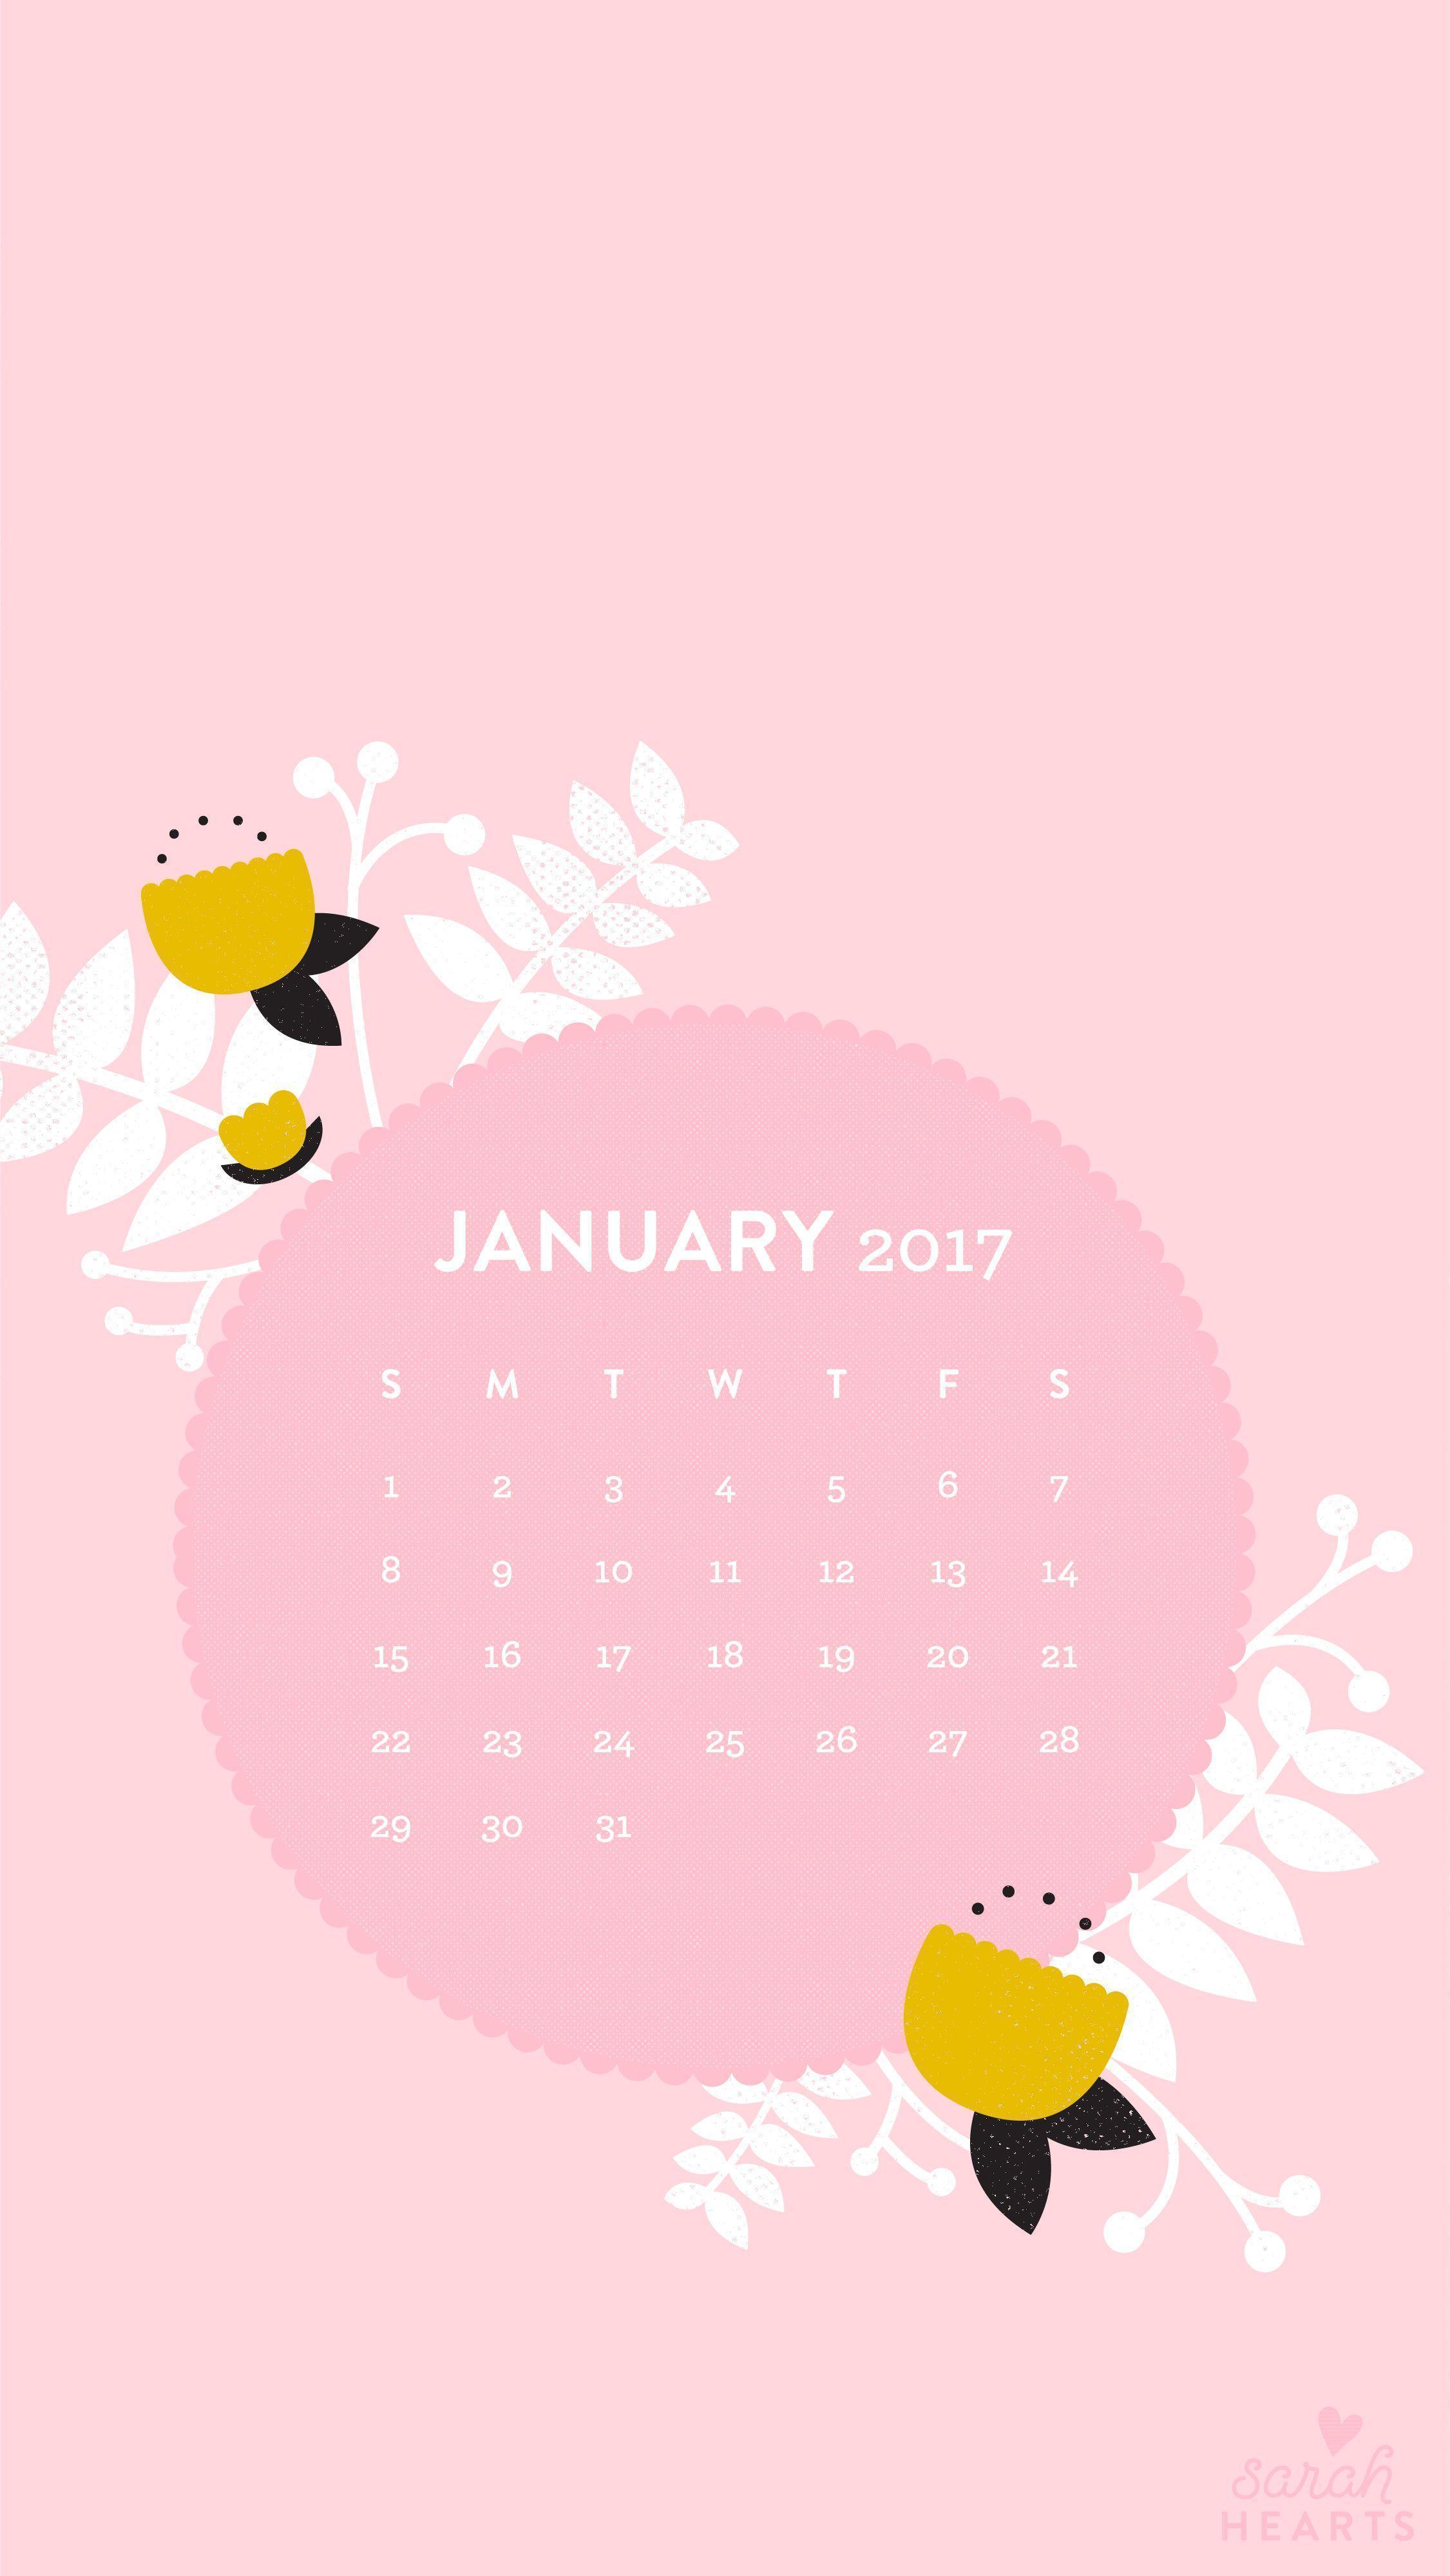 January 2017 Calendar Wallpapers